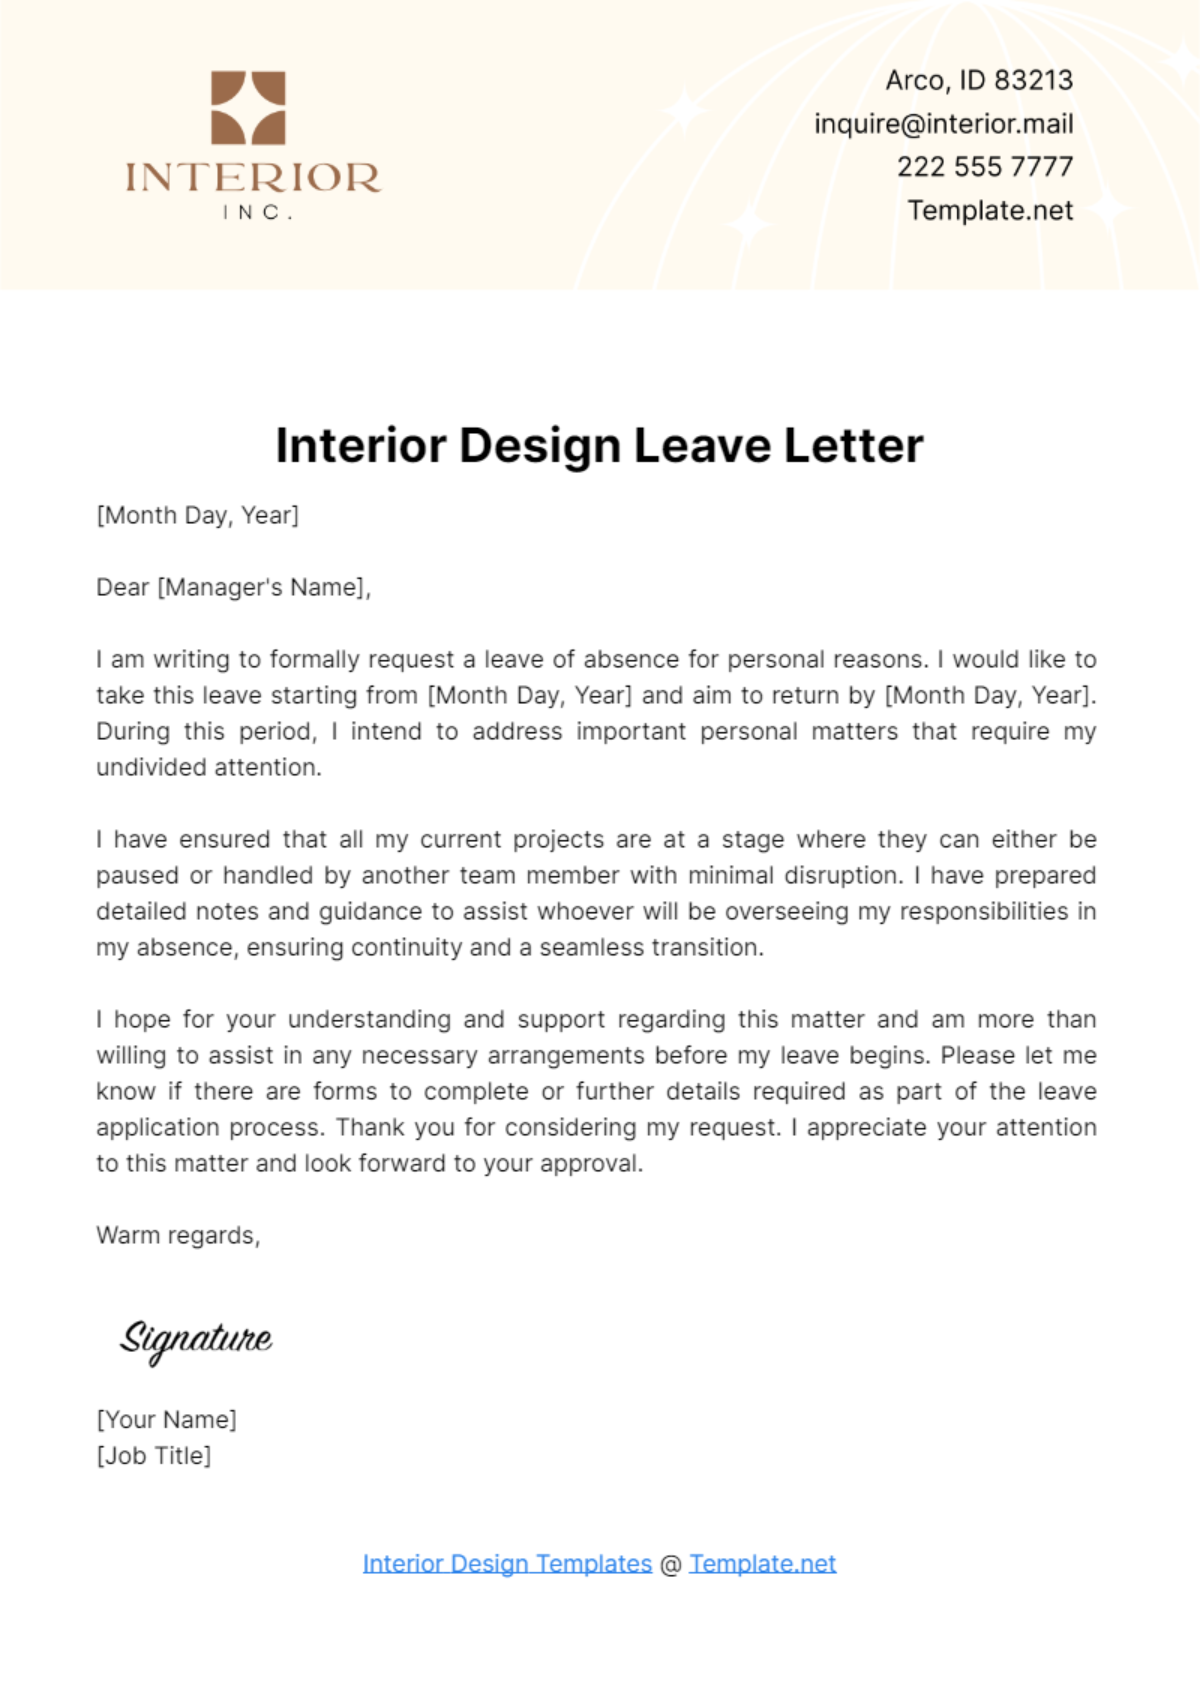 Interior Design Leave Letter Template